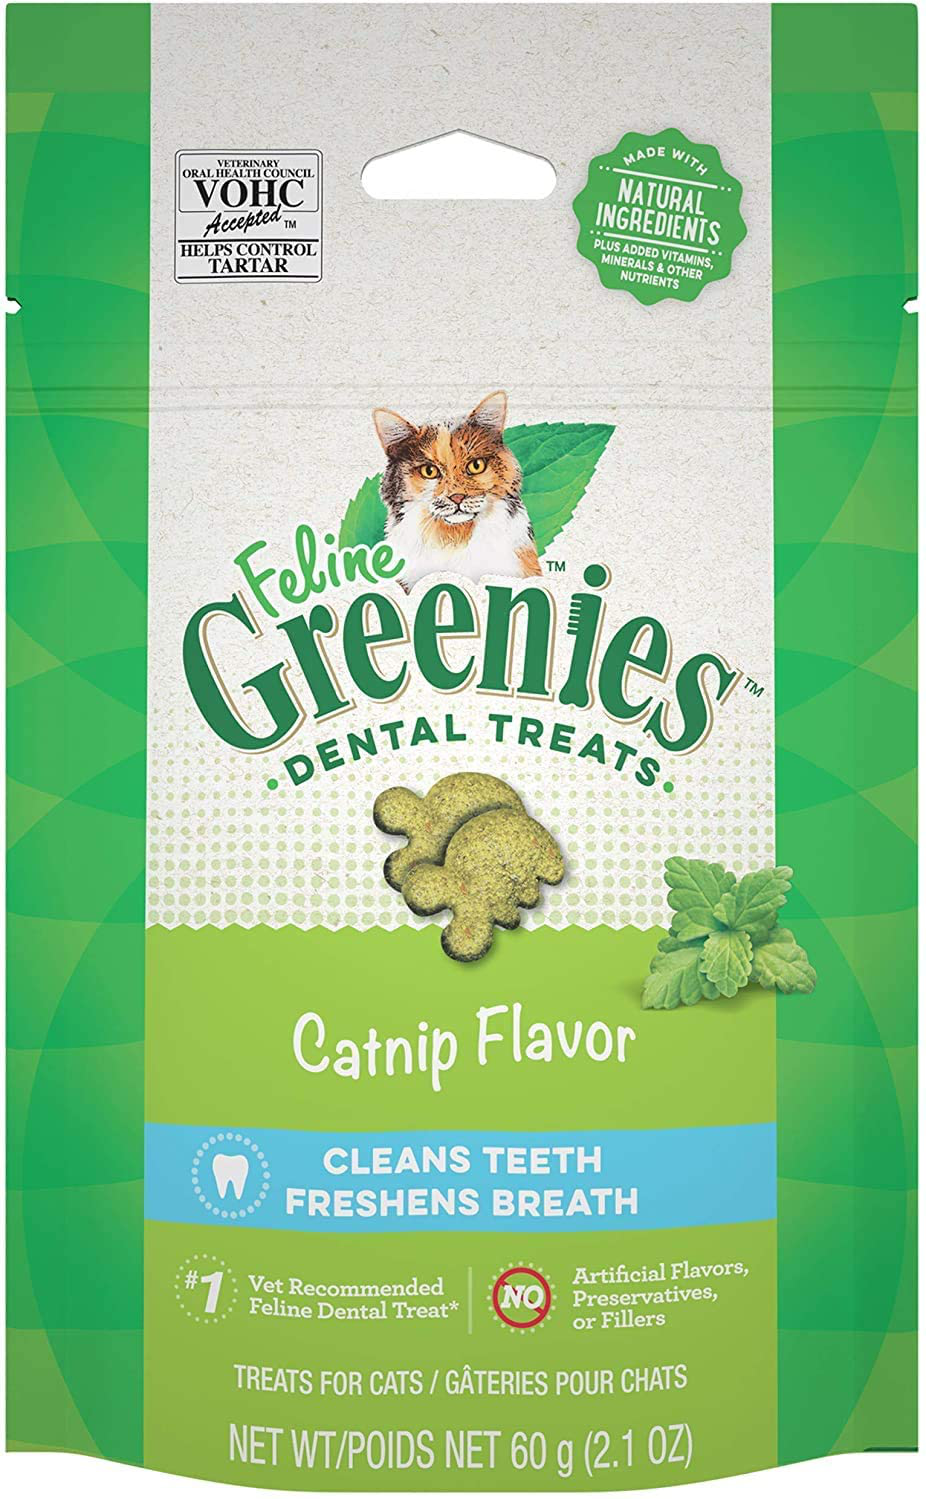 Greenies (4 Pack) Feline Dental Cat Treat Variety Bundle 4 Flavors - 2.1Oz Each Bag, (1) Tempting Tuna, (1) Savory Salmon, (1) Oven Roasted Chicken, and (1) Catnip Flavor 10Ct Pet Wipes Animals & Pet Supplies > Pet Supplies > Cat Supplies > Cat Treats Greenies   